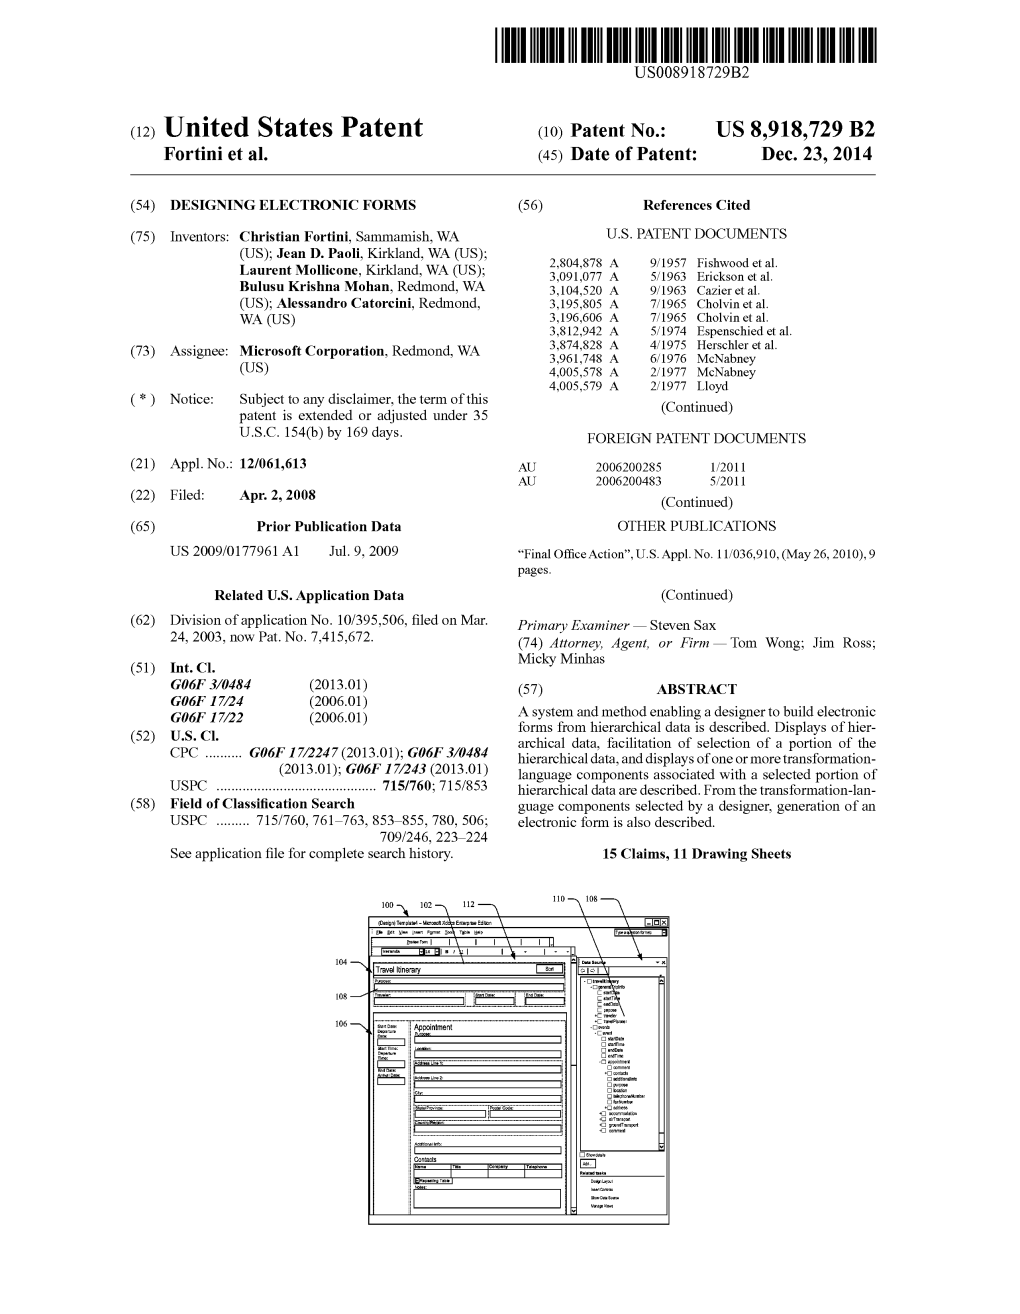 (12) United States Patent (10) Patent No.: US 8,918,729 B2 Fortini Et Al